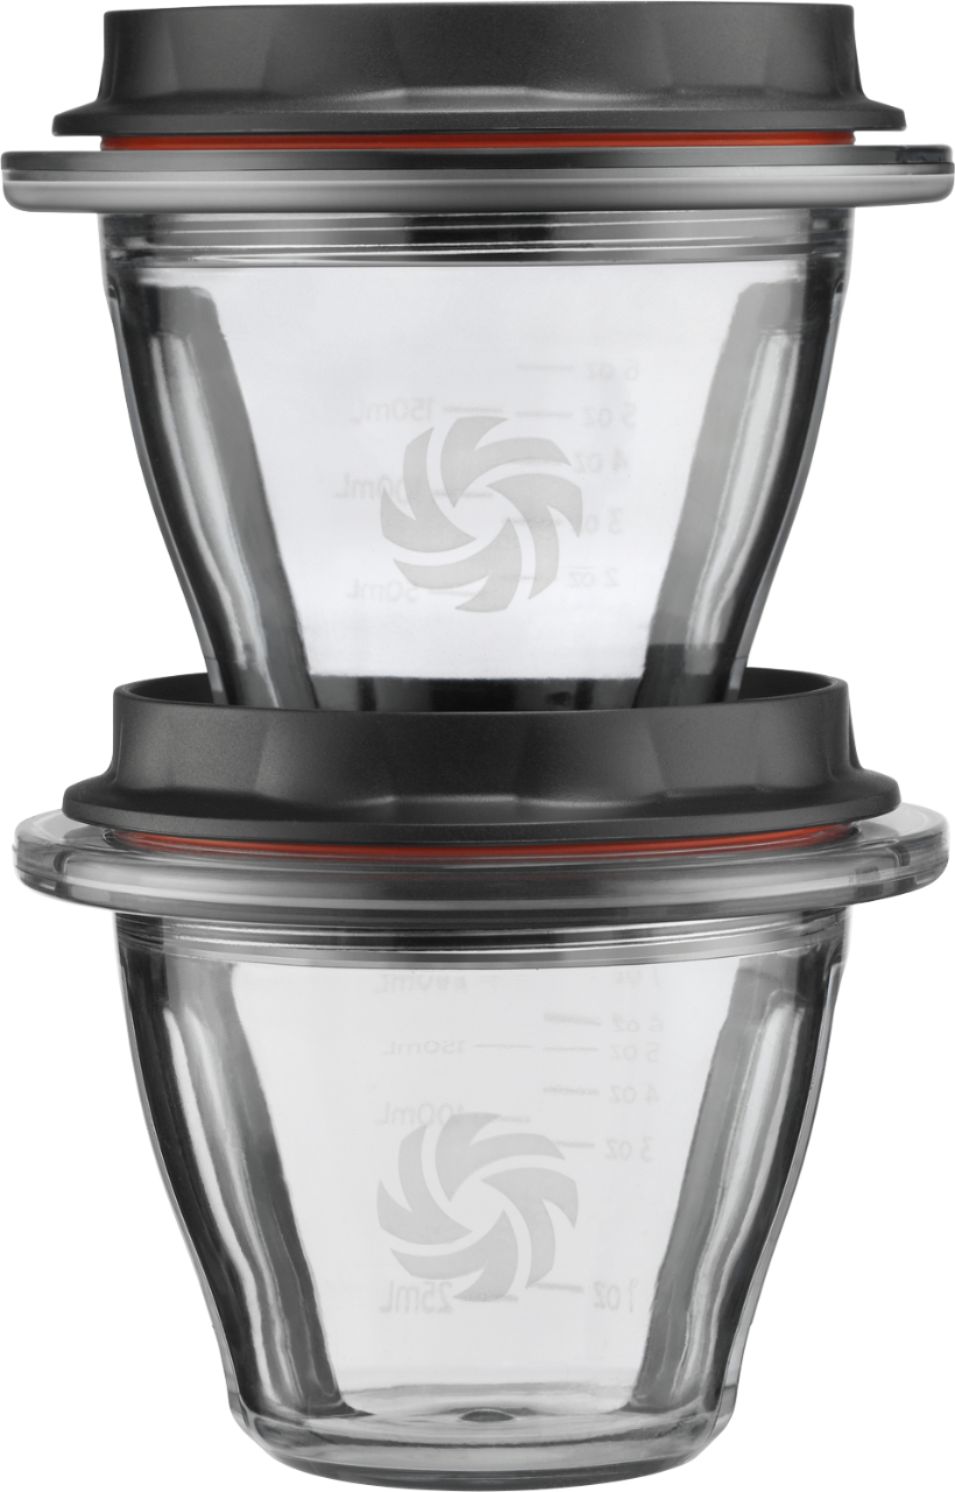 Blending Bowls Accessory for Vitamix Ascent Series Blenders - Black/Clear